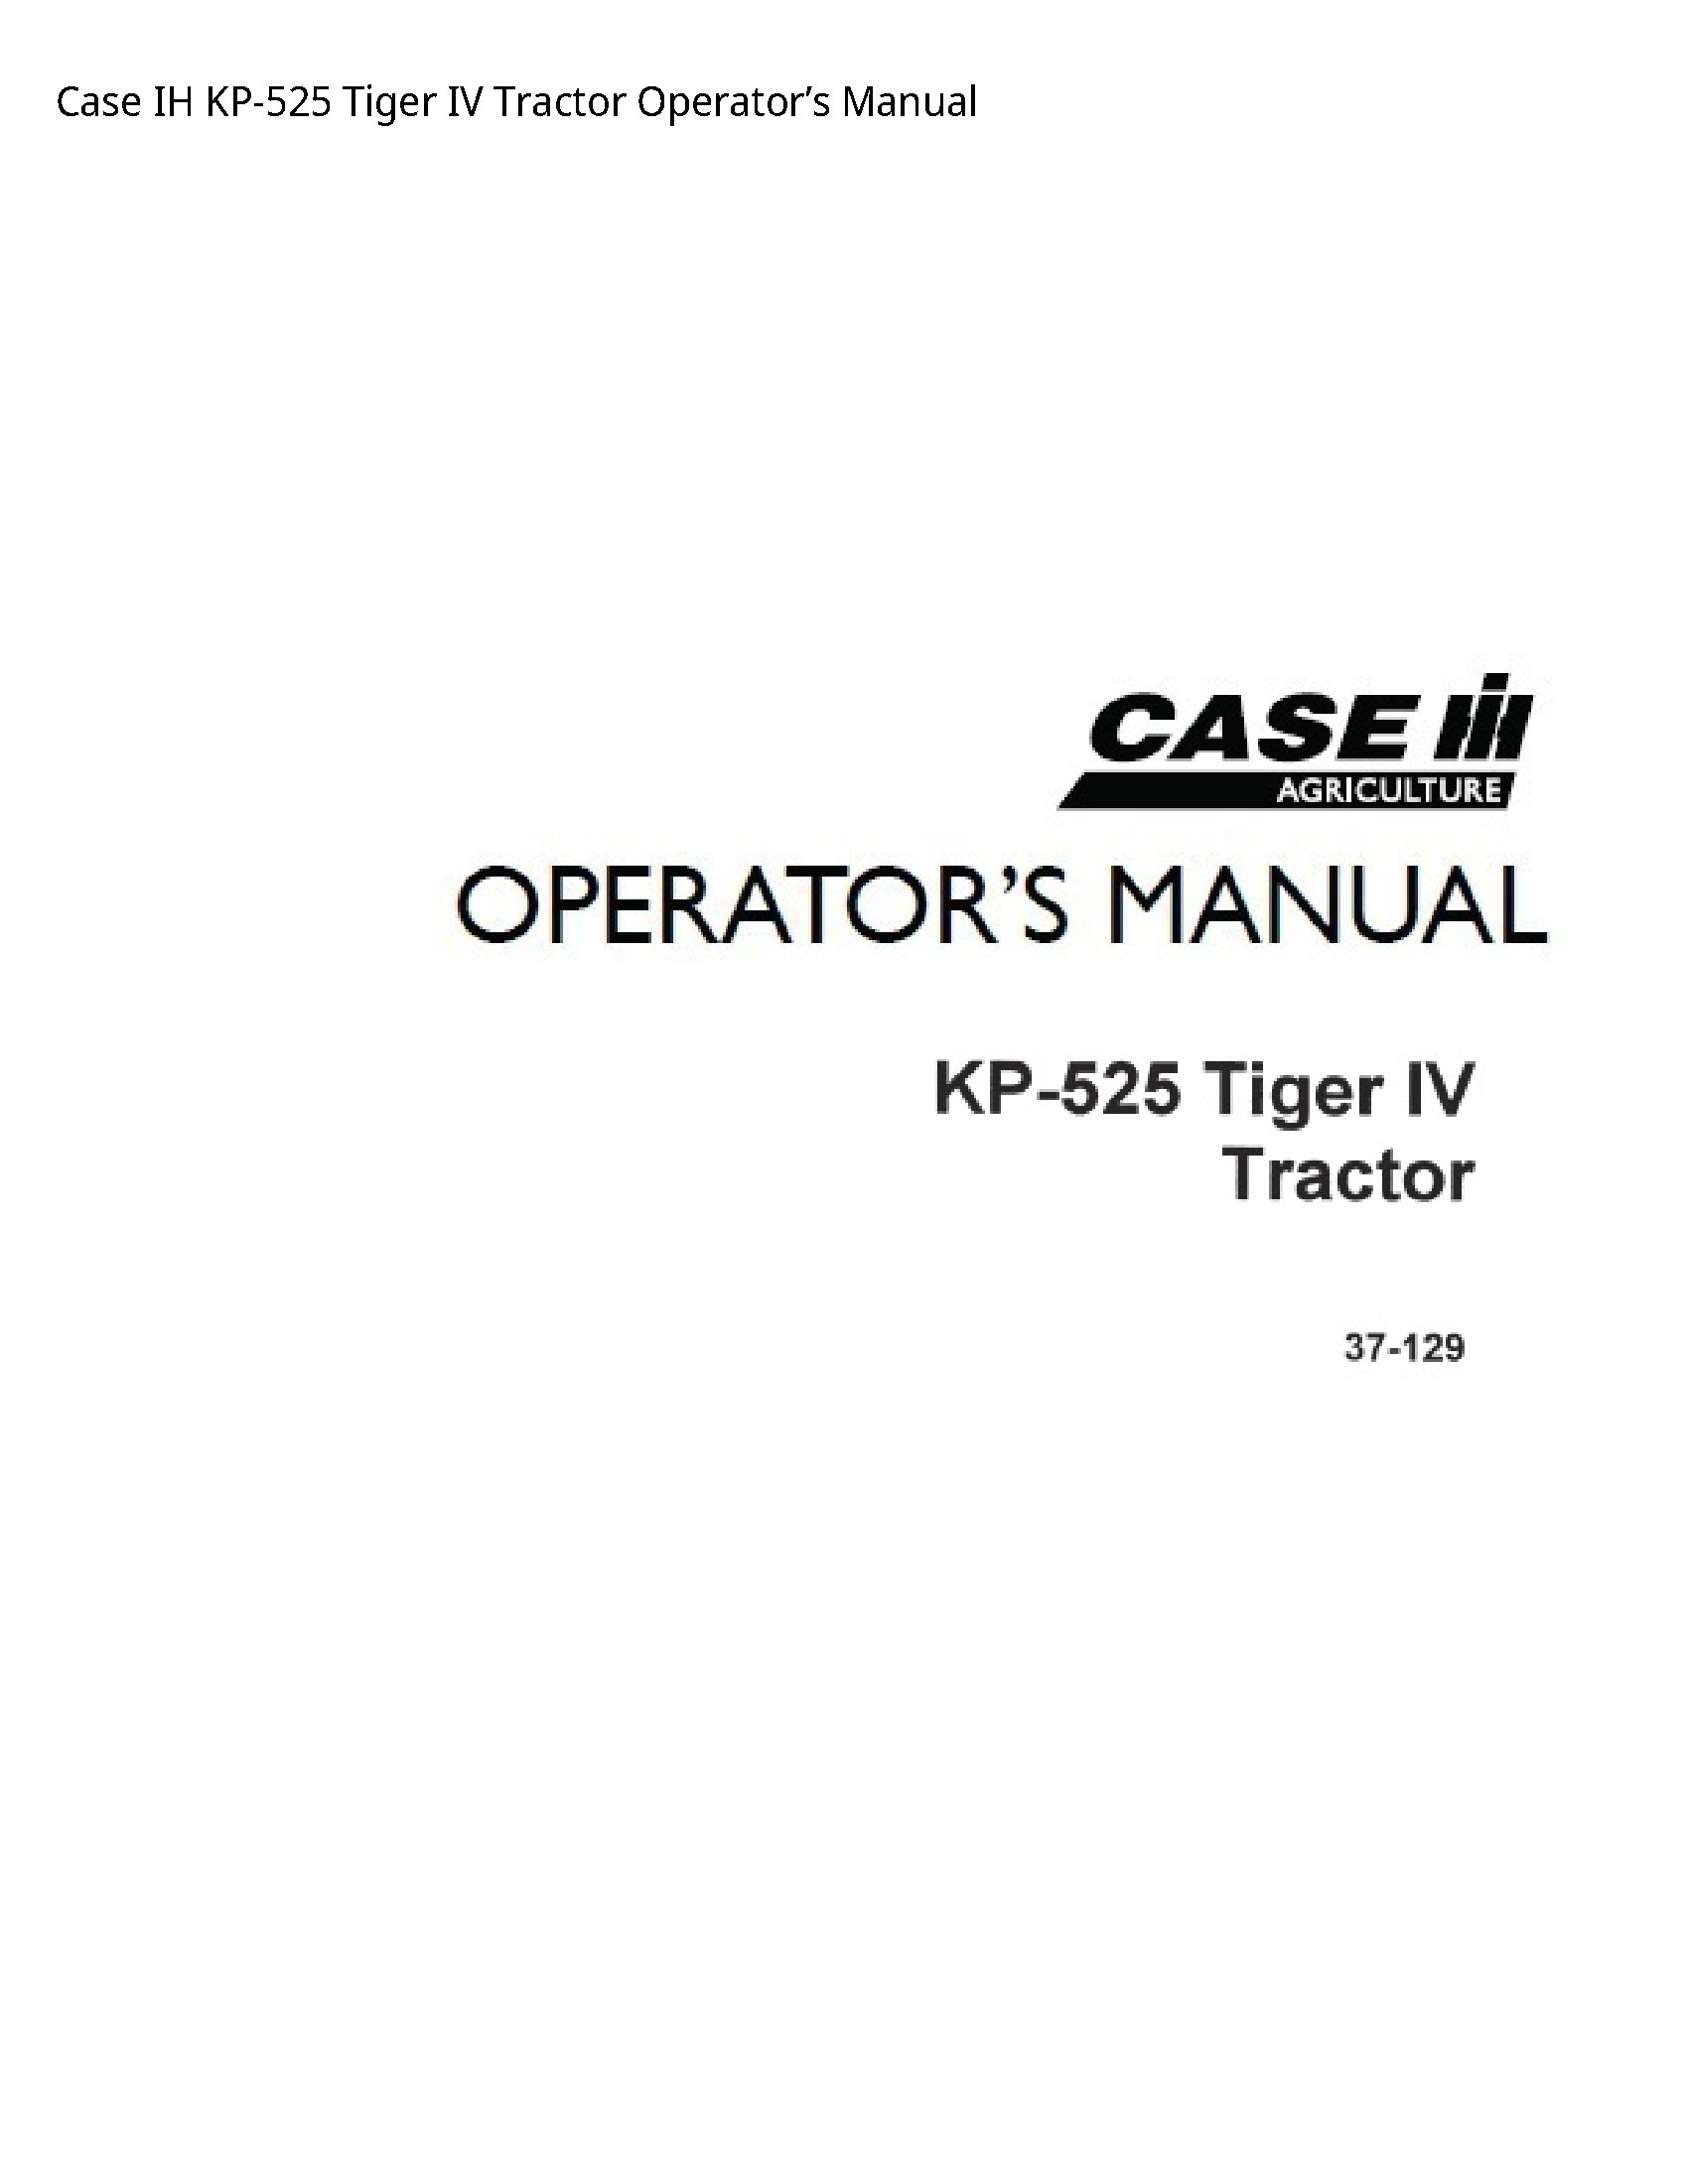 Case/Case IH KP-525 IH Tiger IV Tractor Operator’s manual